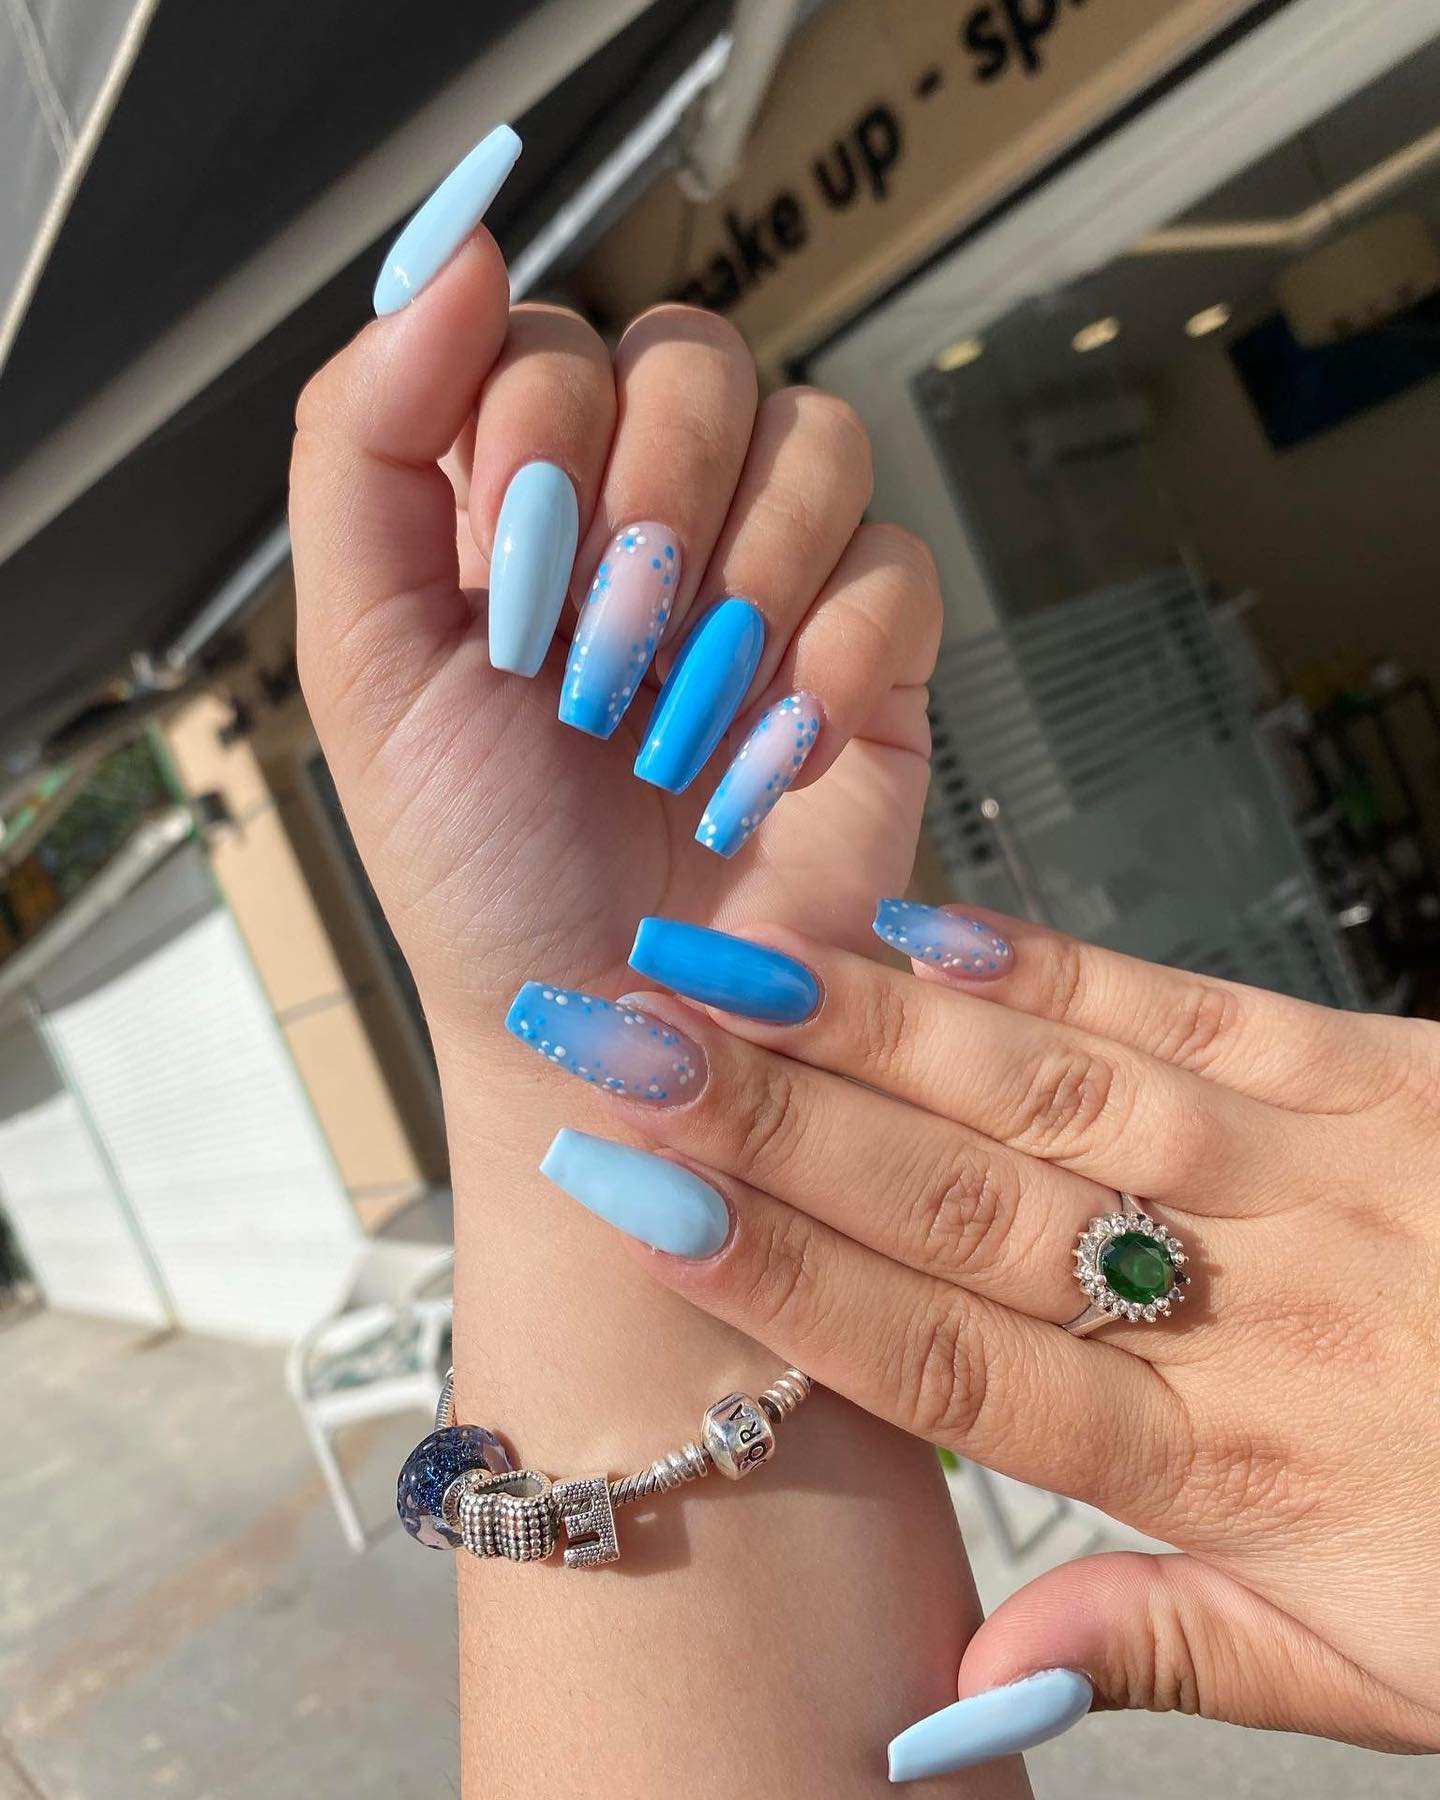 💙 Beauty Way: Blue design Acrylic Nails
 
#nails #nailsnailsnails #nailart #zante #zante_greece #laganas #nail #lovenails #naildesign #nailaddict #nailartist #nailtechlife#acrylic #acrylicnails #longnails #nailsblue #nailsblue💙#nailartist#nailsofin